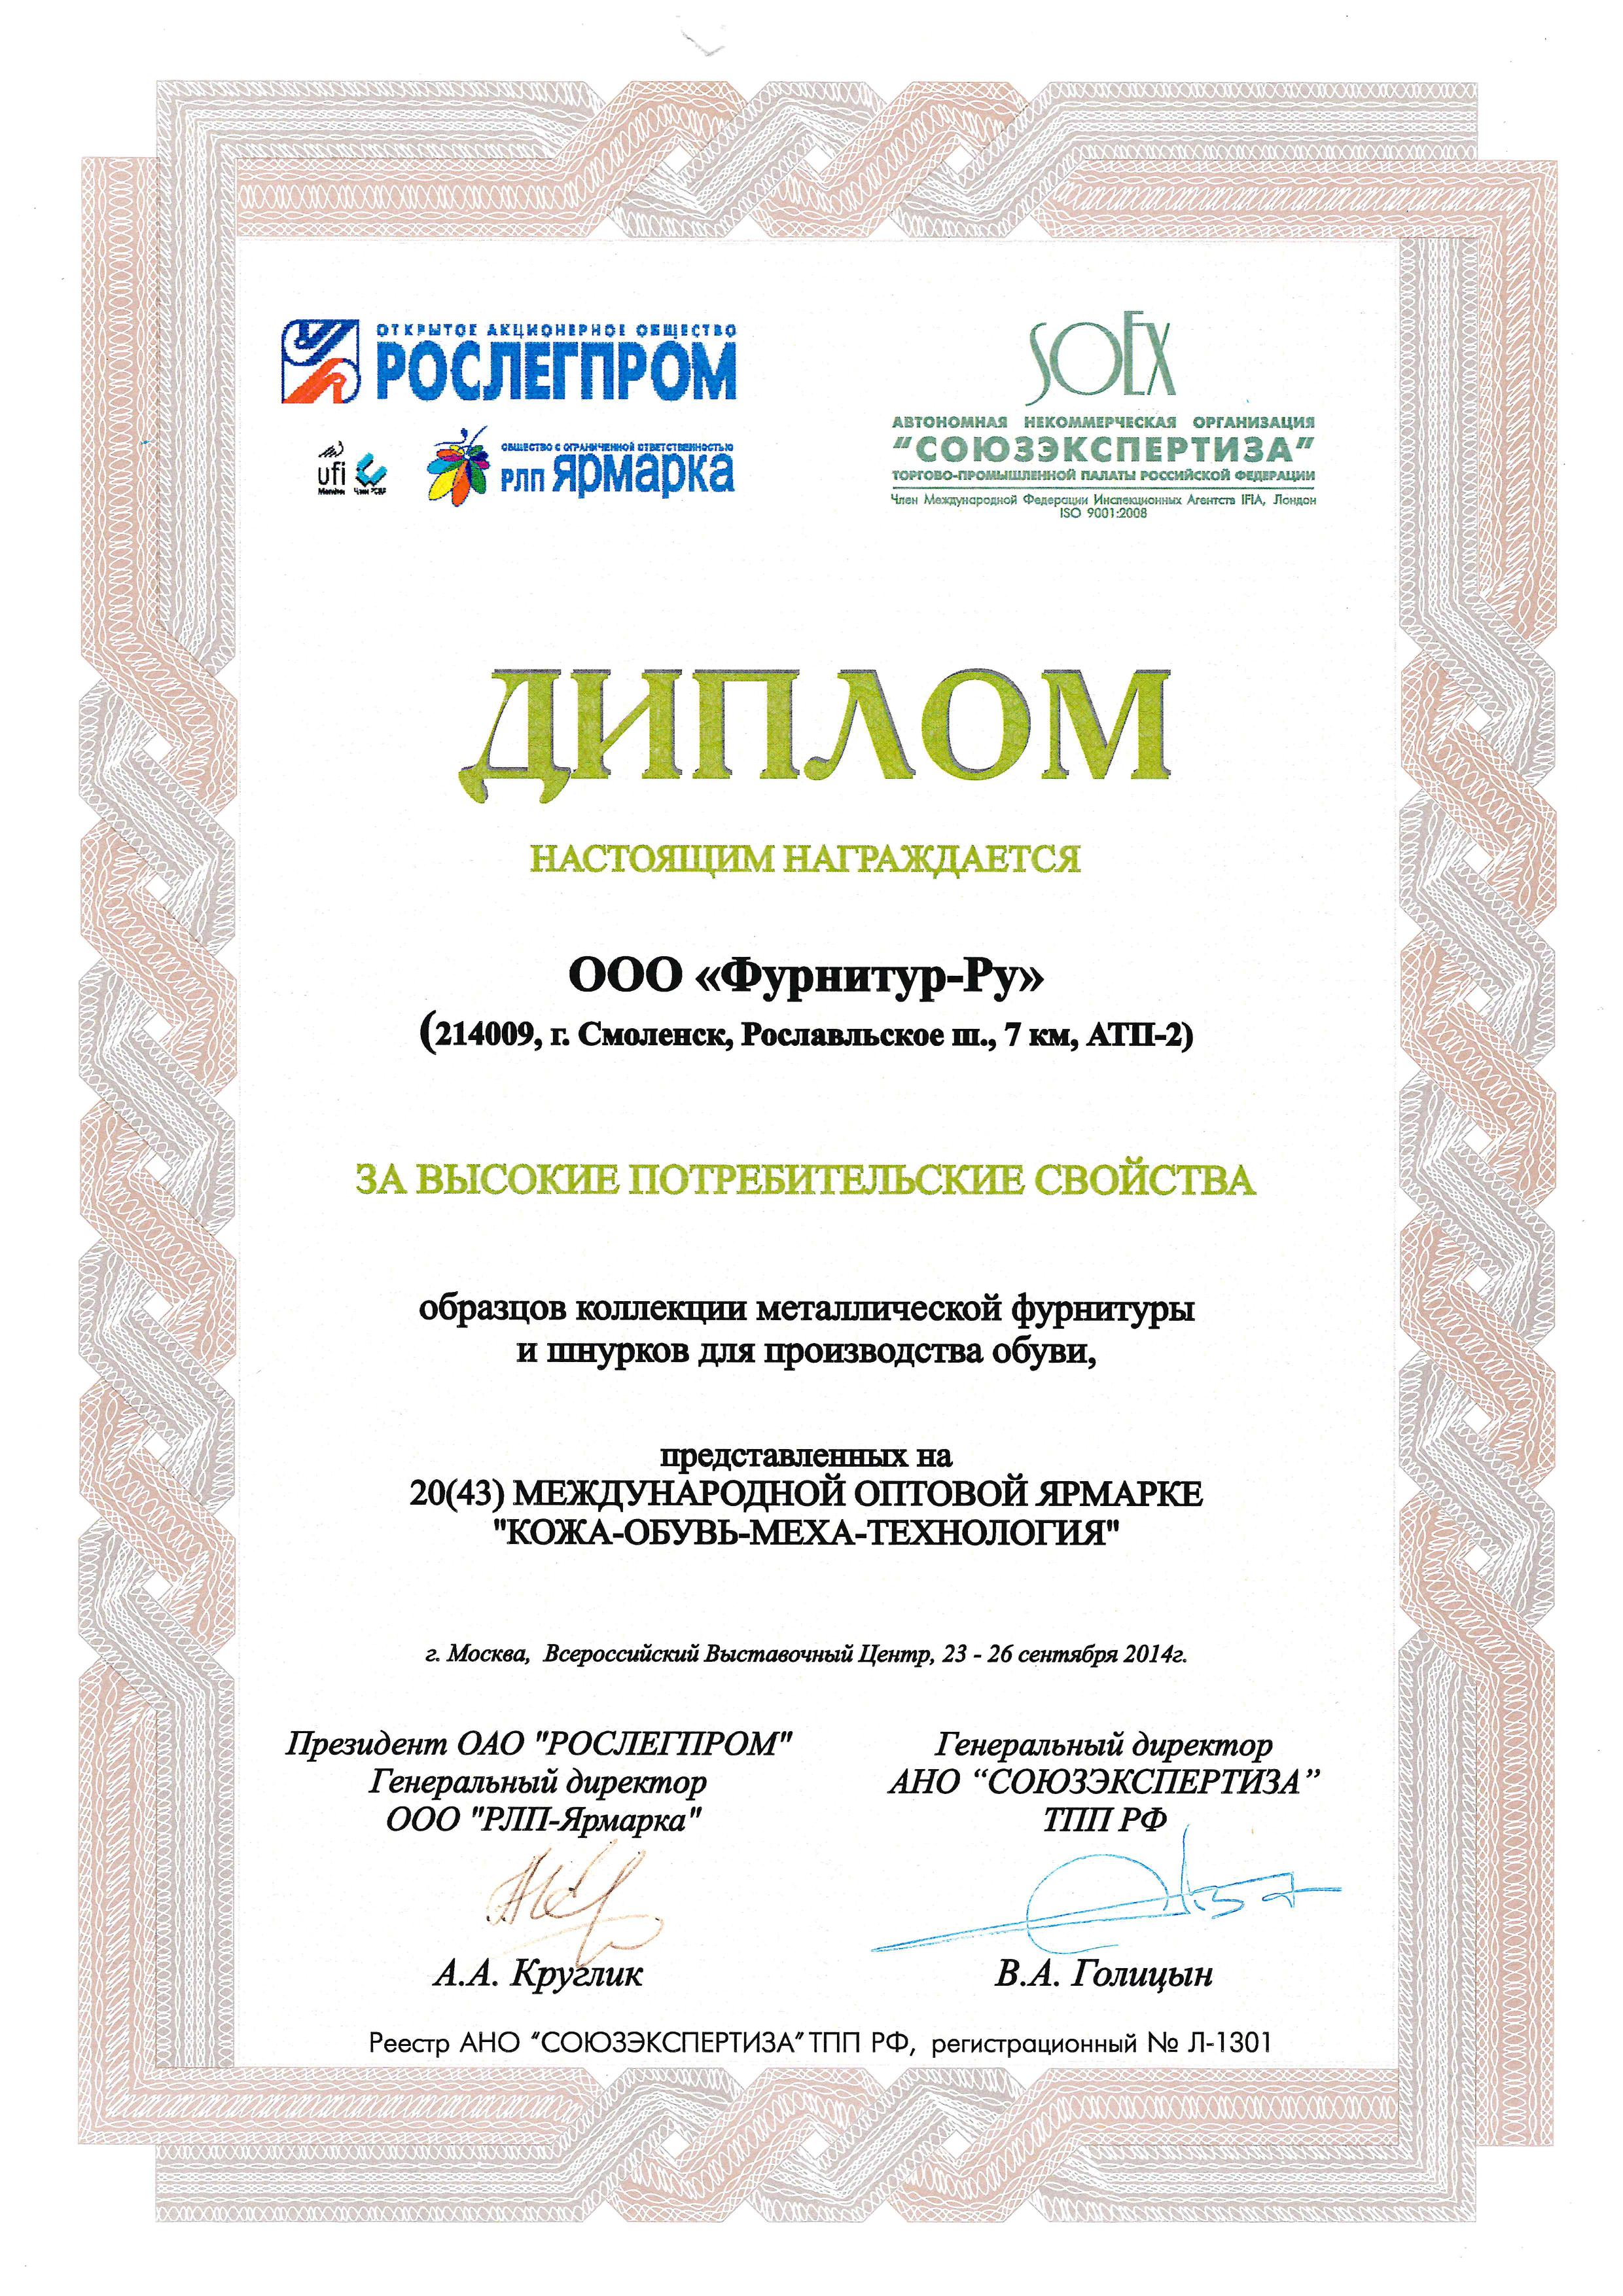 Международная оптовая ярмарка 2014 (Москва)